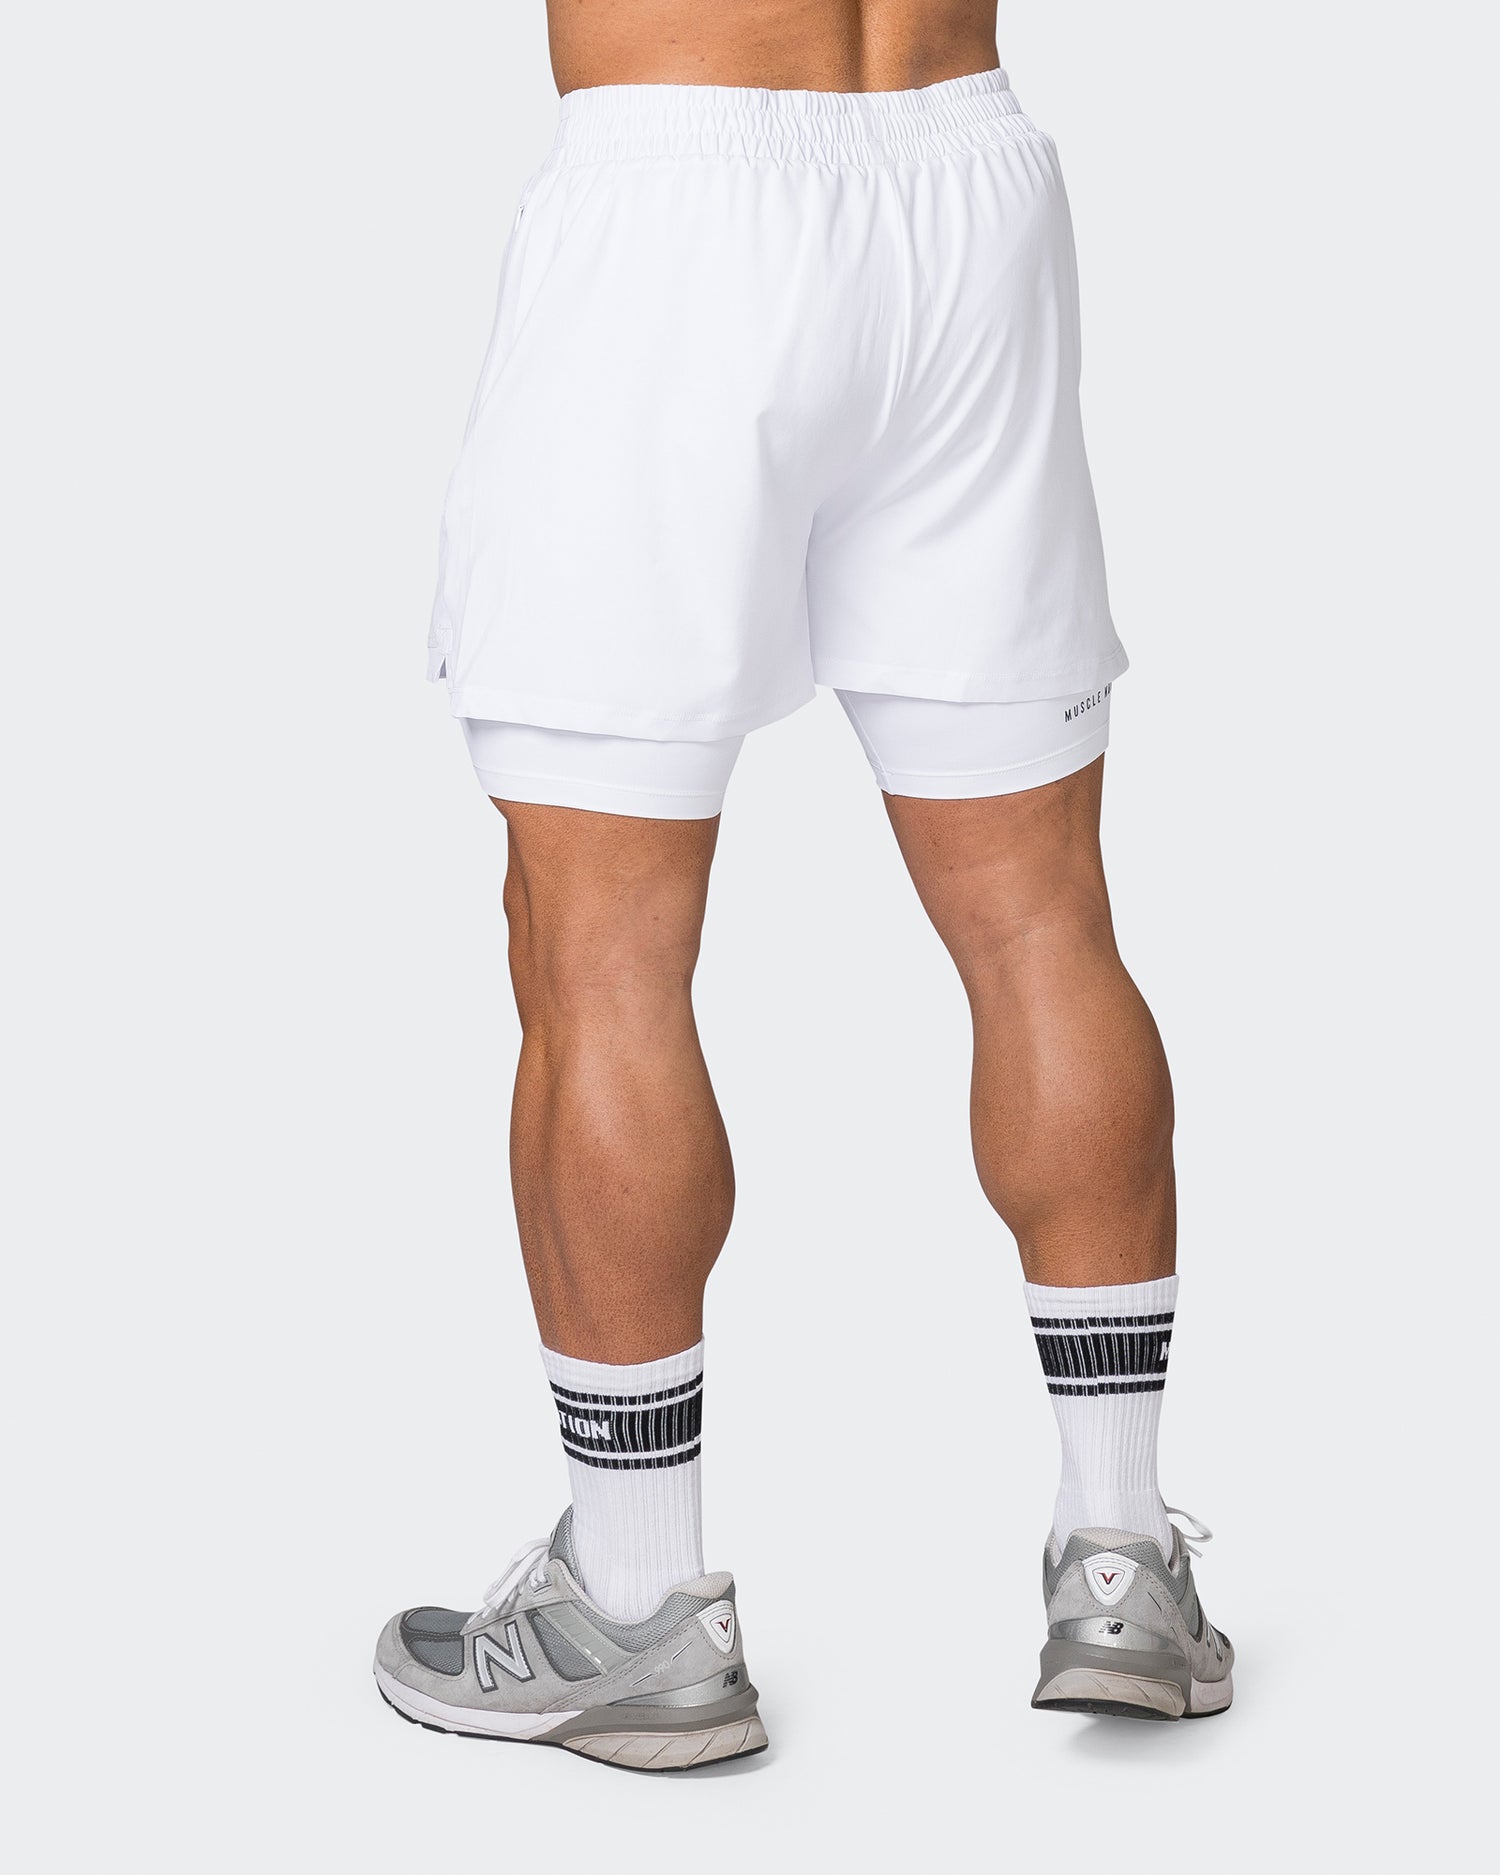 Vigour Training Shorts - White